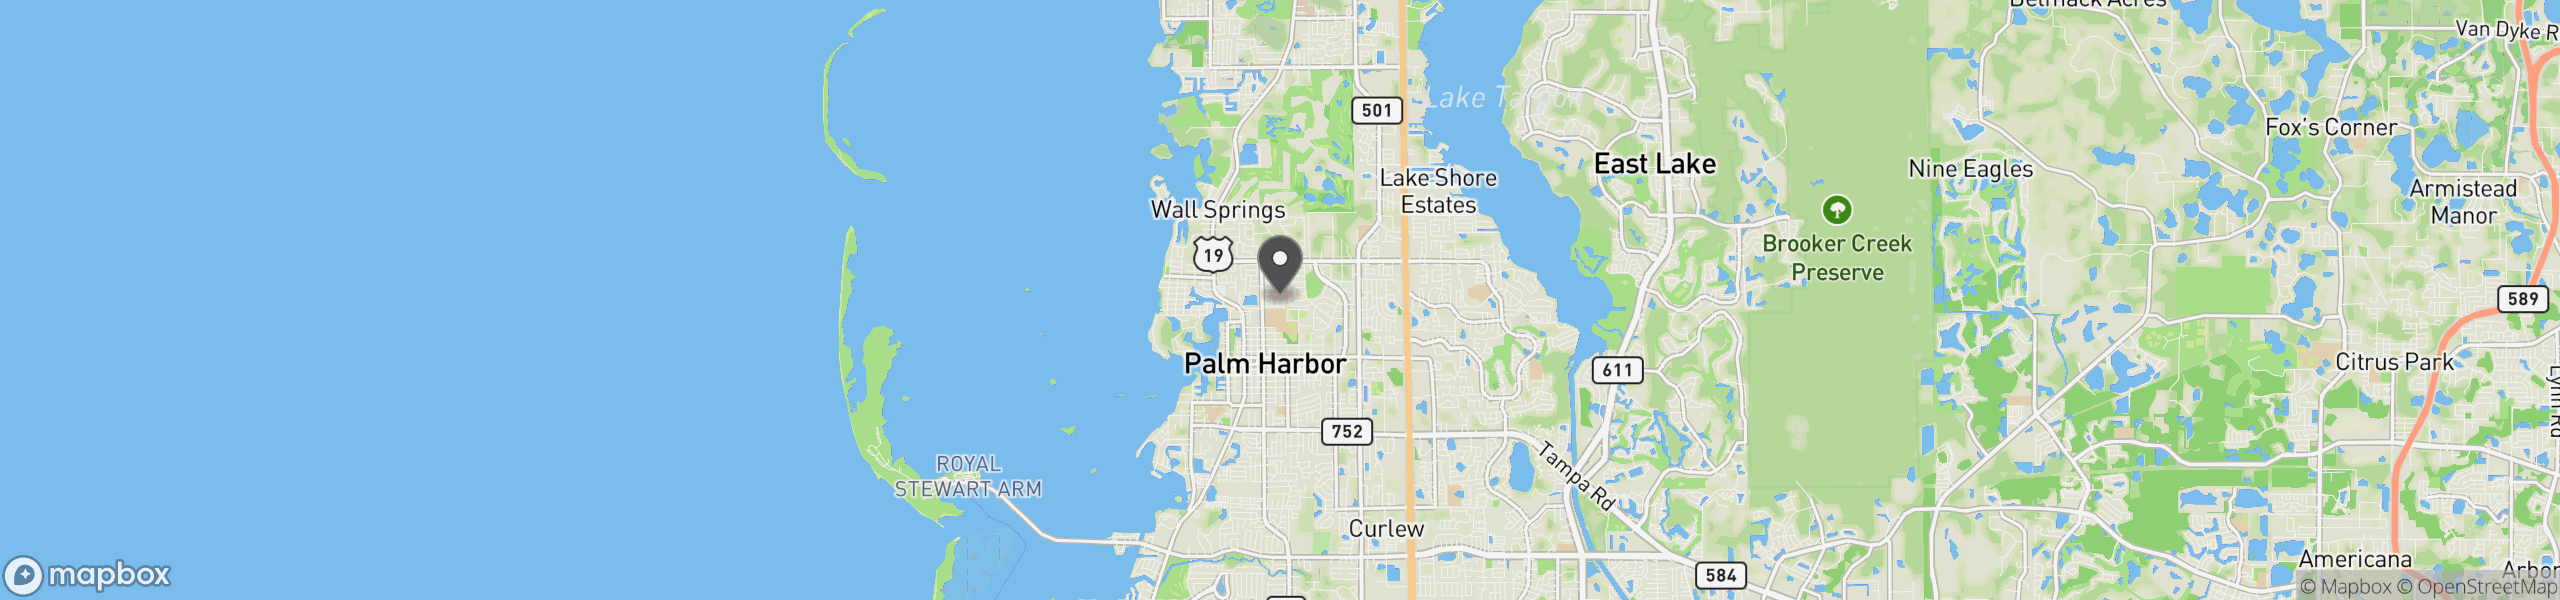 Palm Harbor, FL 34683